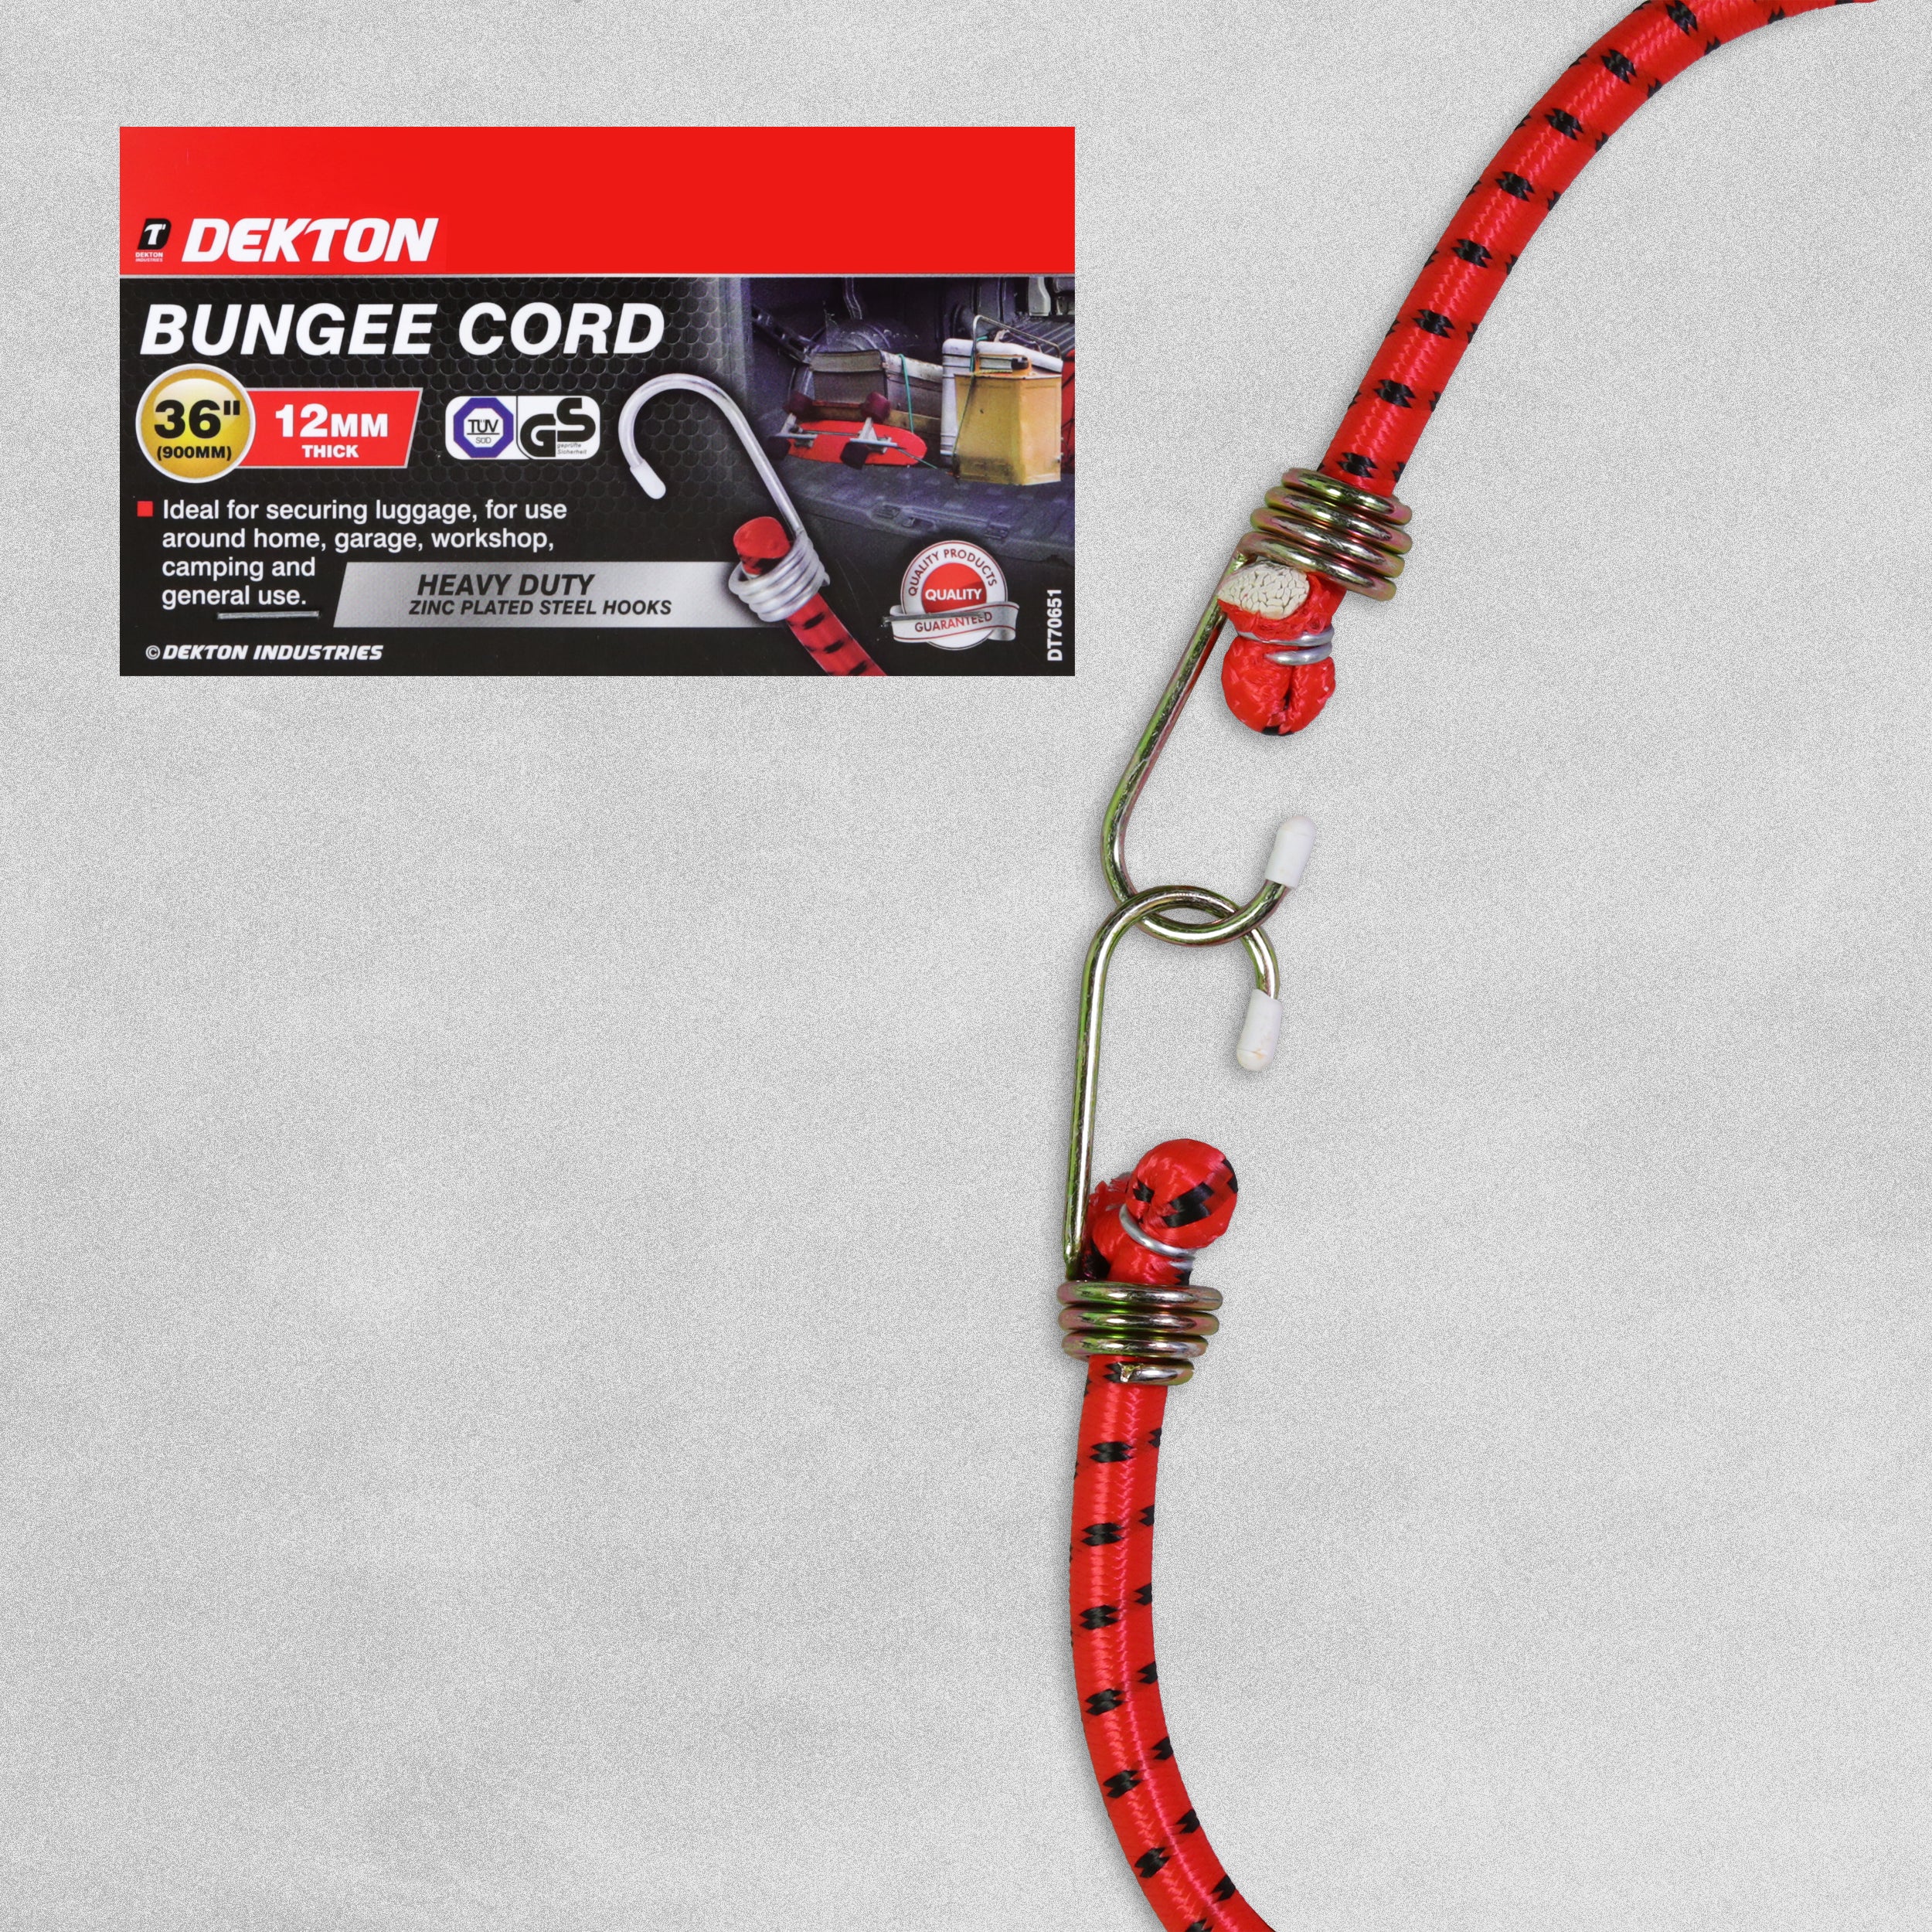 Dekton Bungee Cord With Zinc Plated Steel Hooks 12mm - 36" long